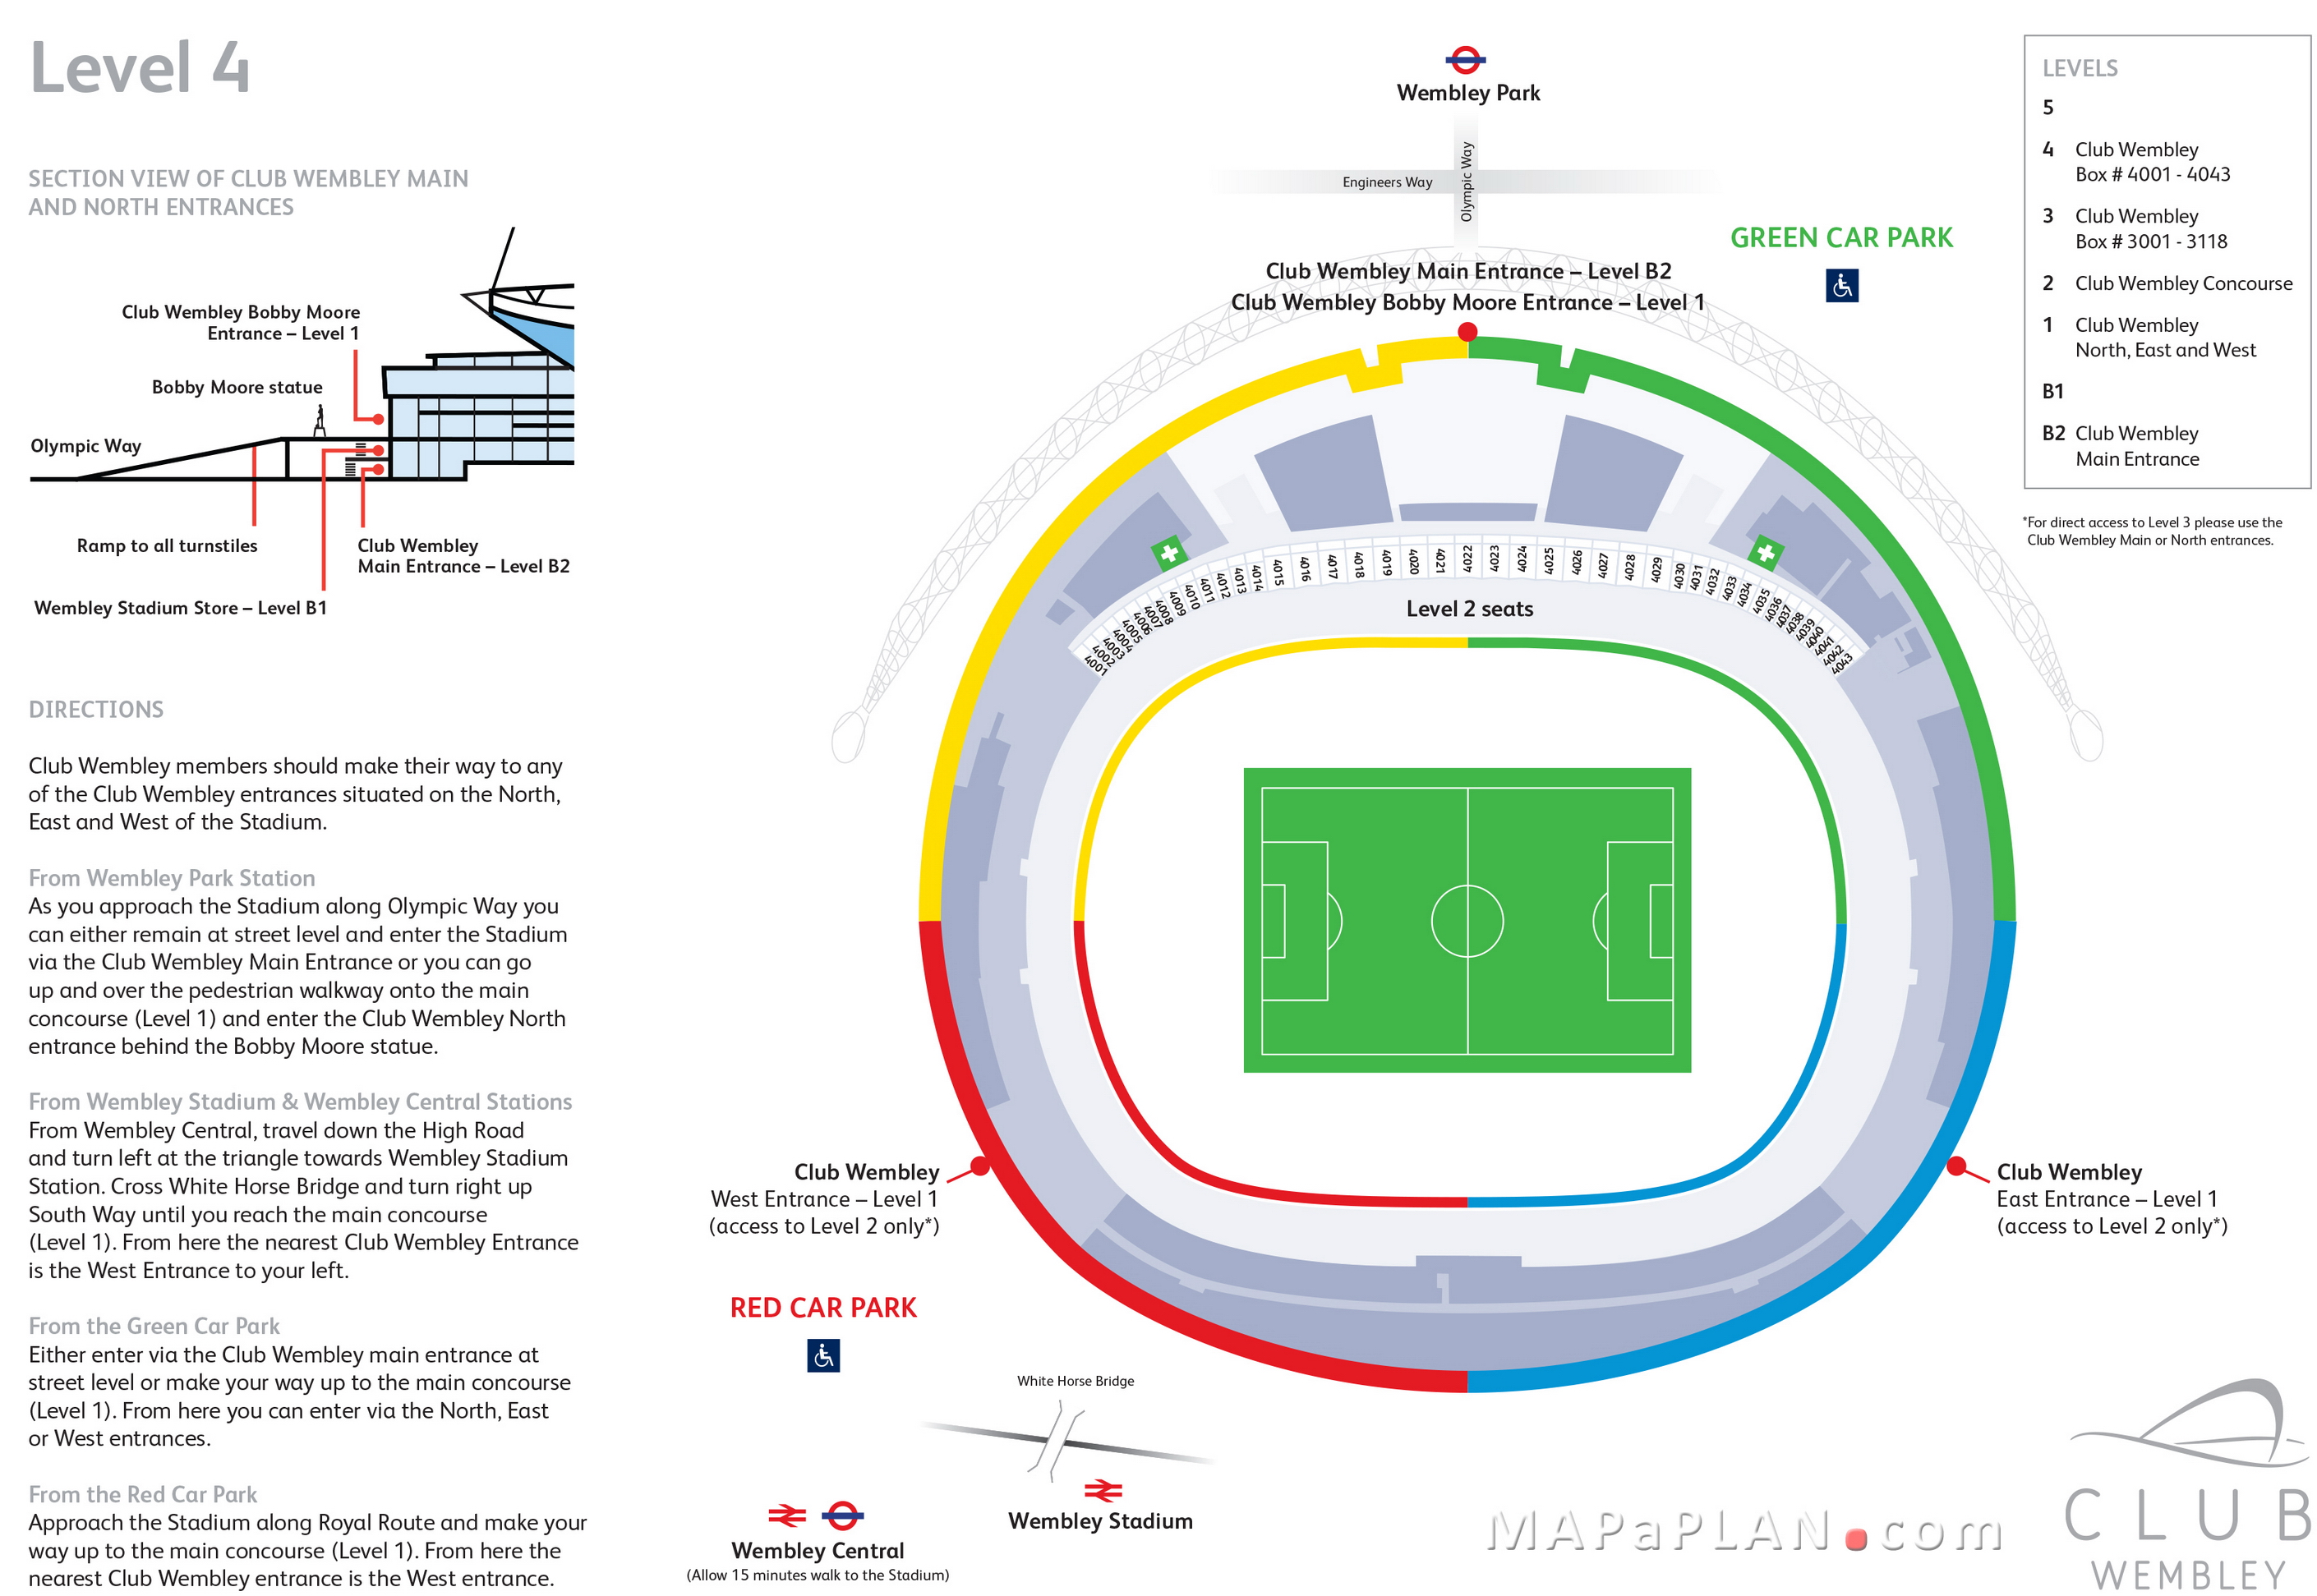 Wembley Stadium seating plan Level 4 Club Wembley boxes